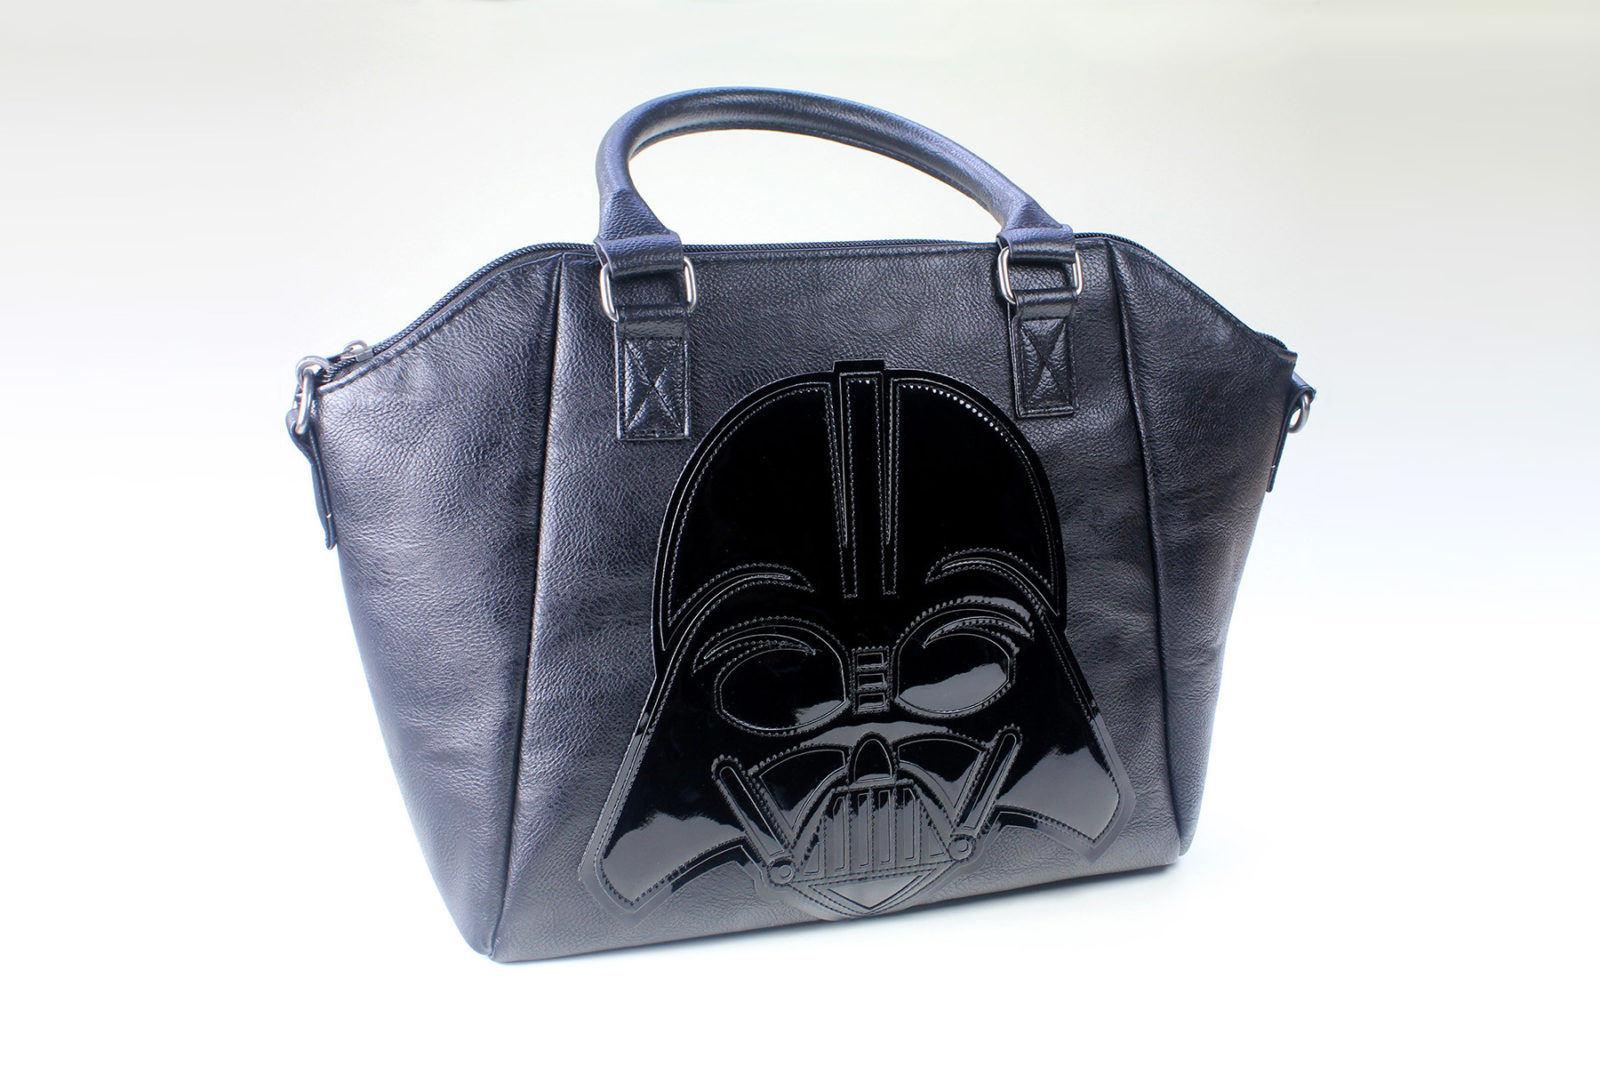 Review – Vader handbag